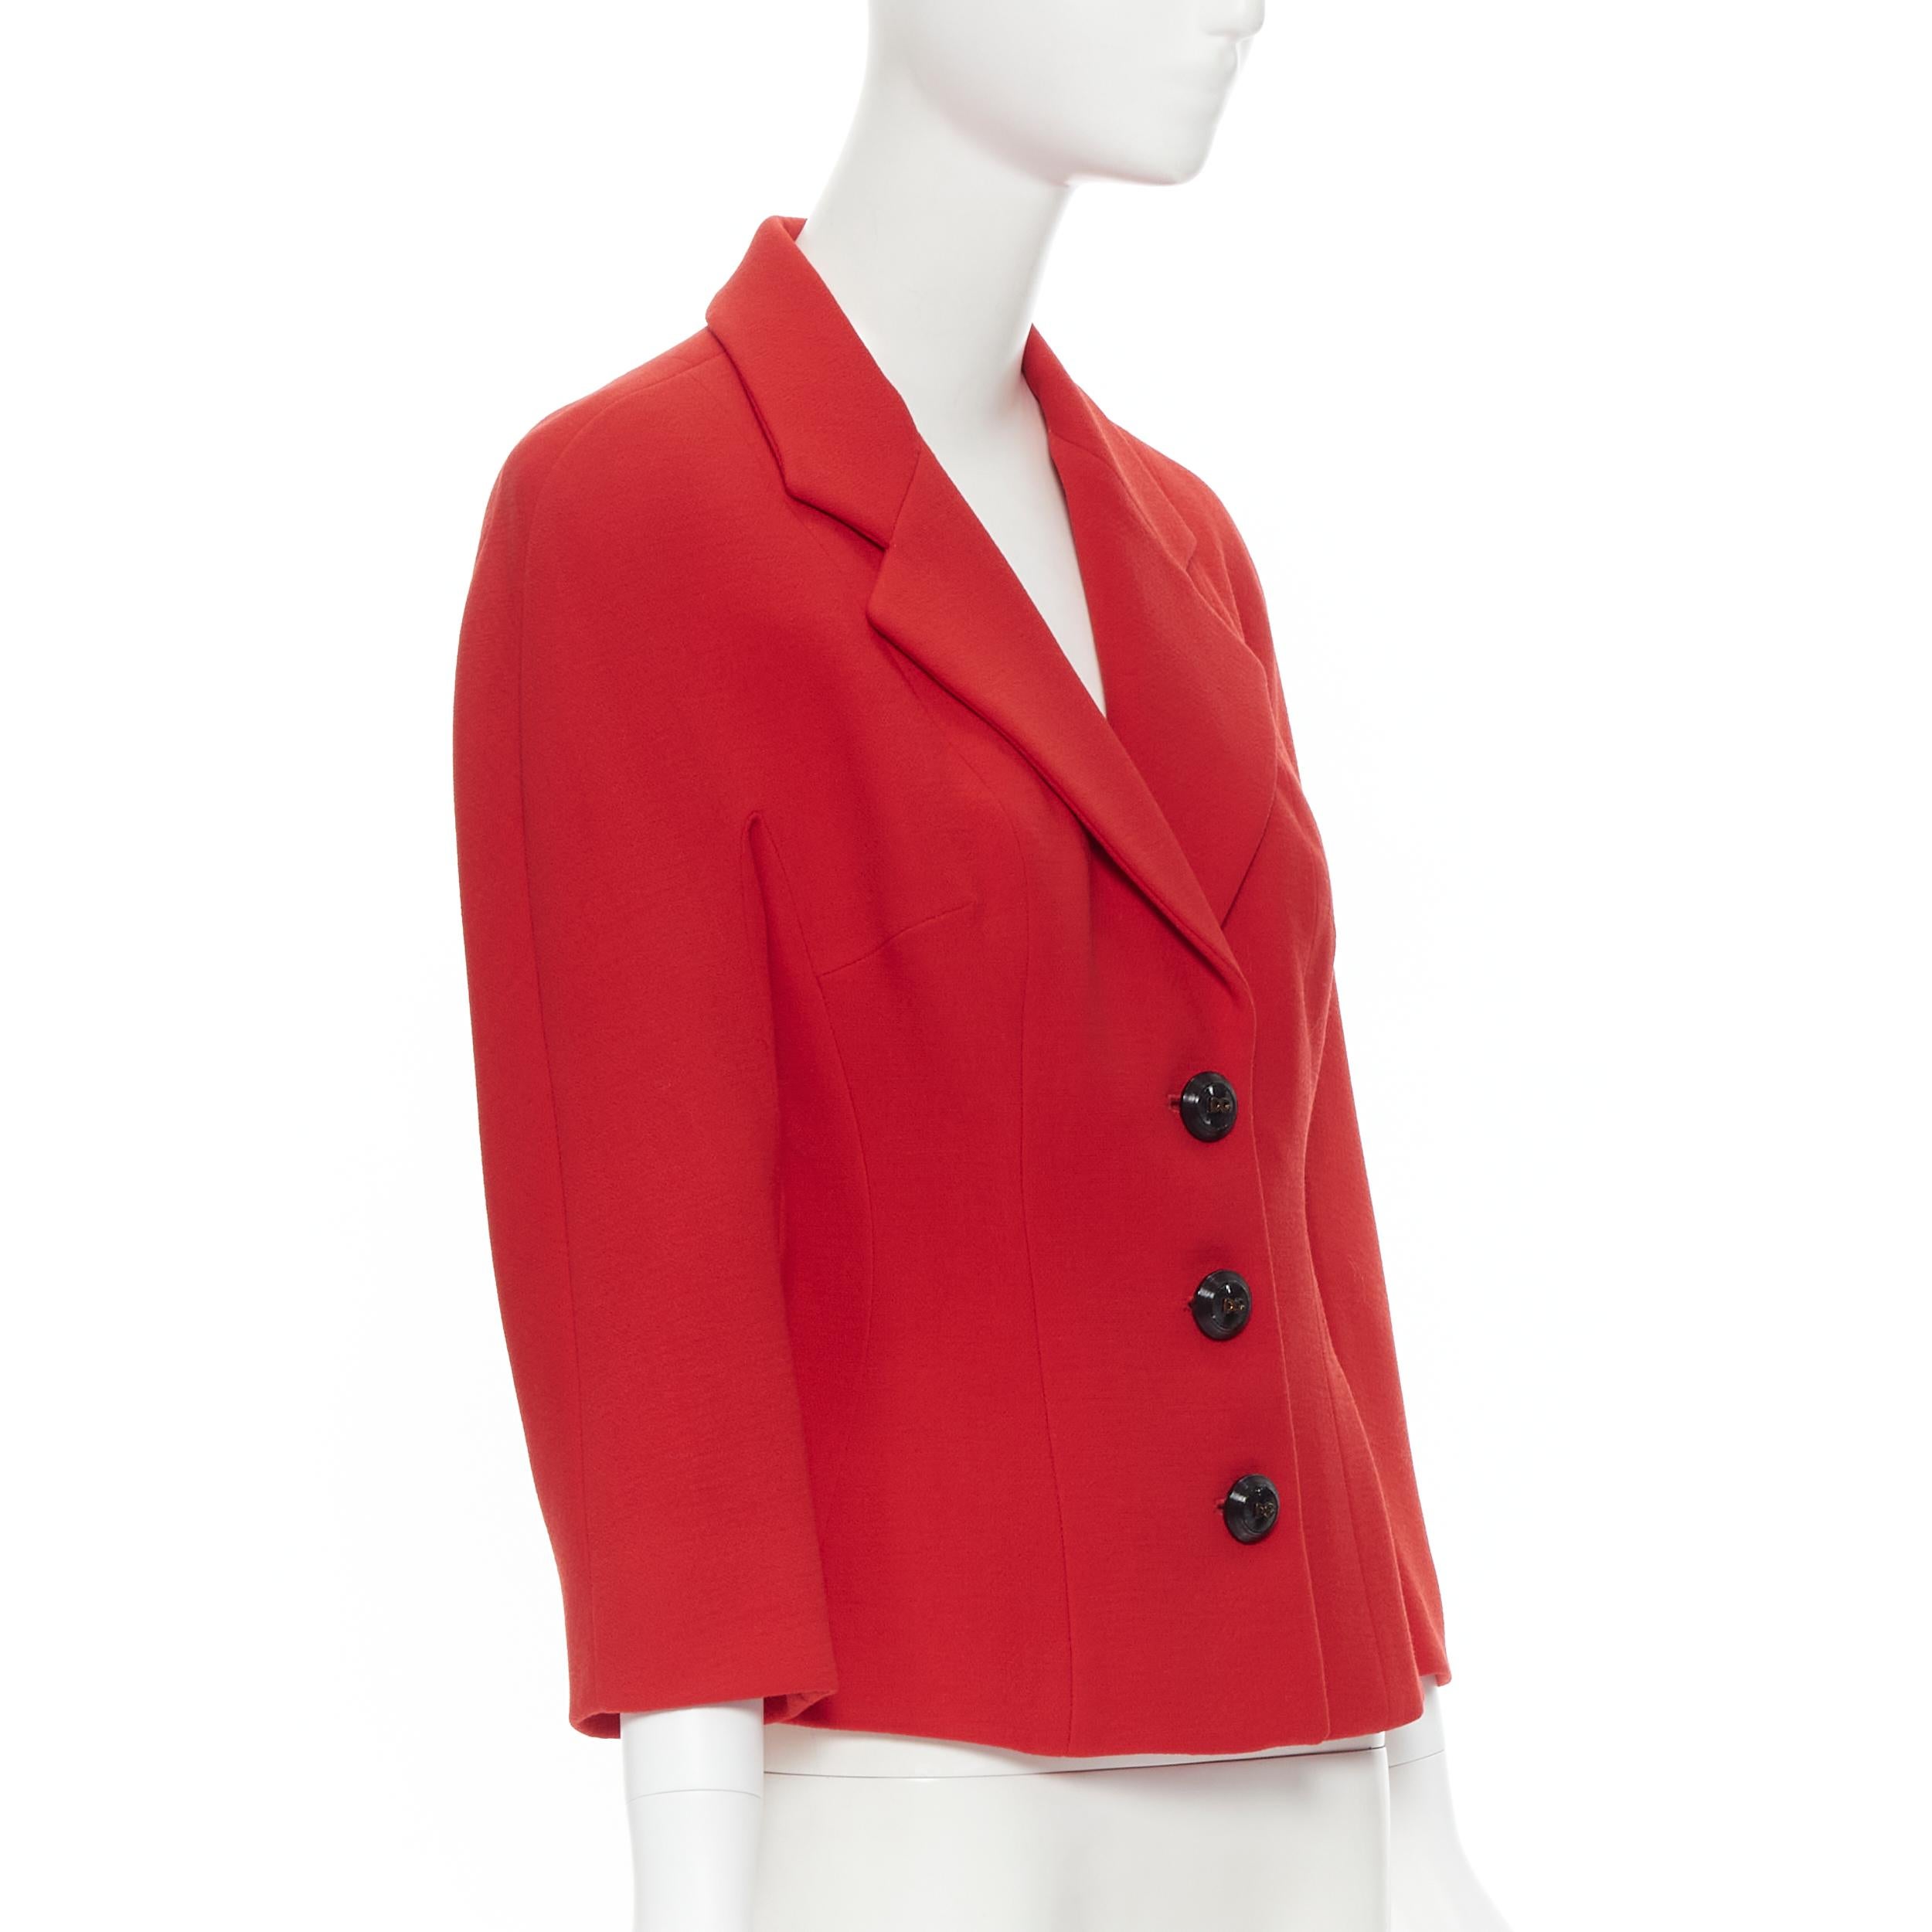 red blazer and skirt set